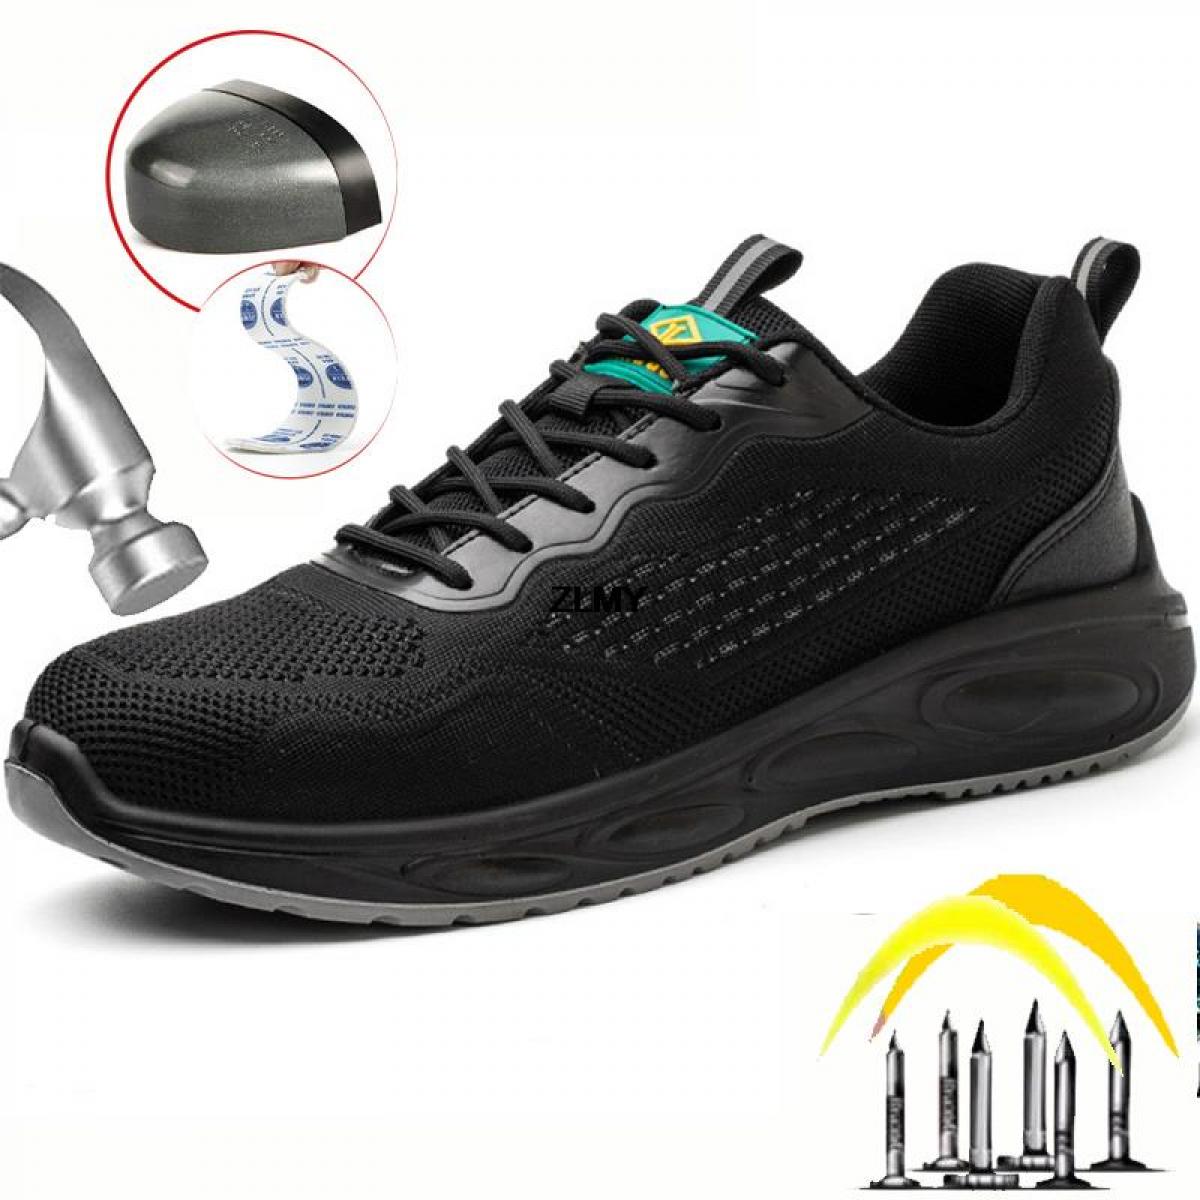 Buy Memory Reckoning 7 Slip Resistant Steel Toe Sneakers Men's Footwear  from Fila. Find Fila fashion & more at DrJays.com